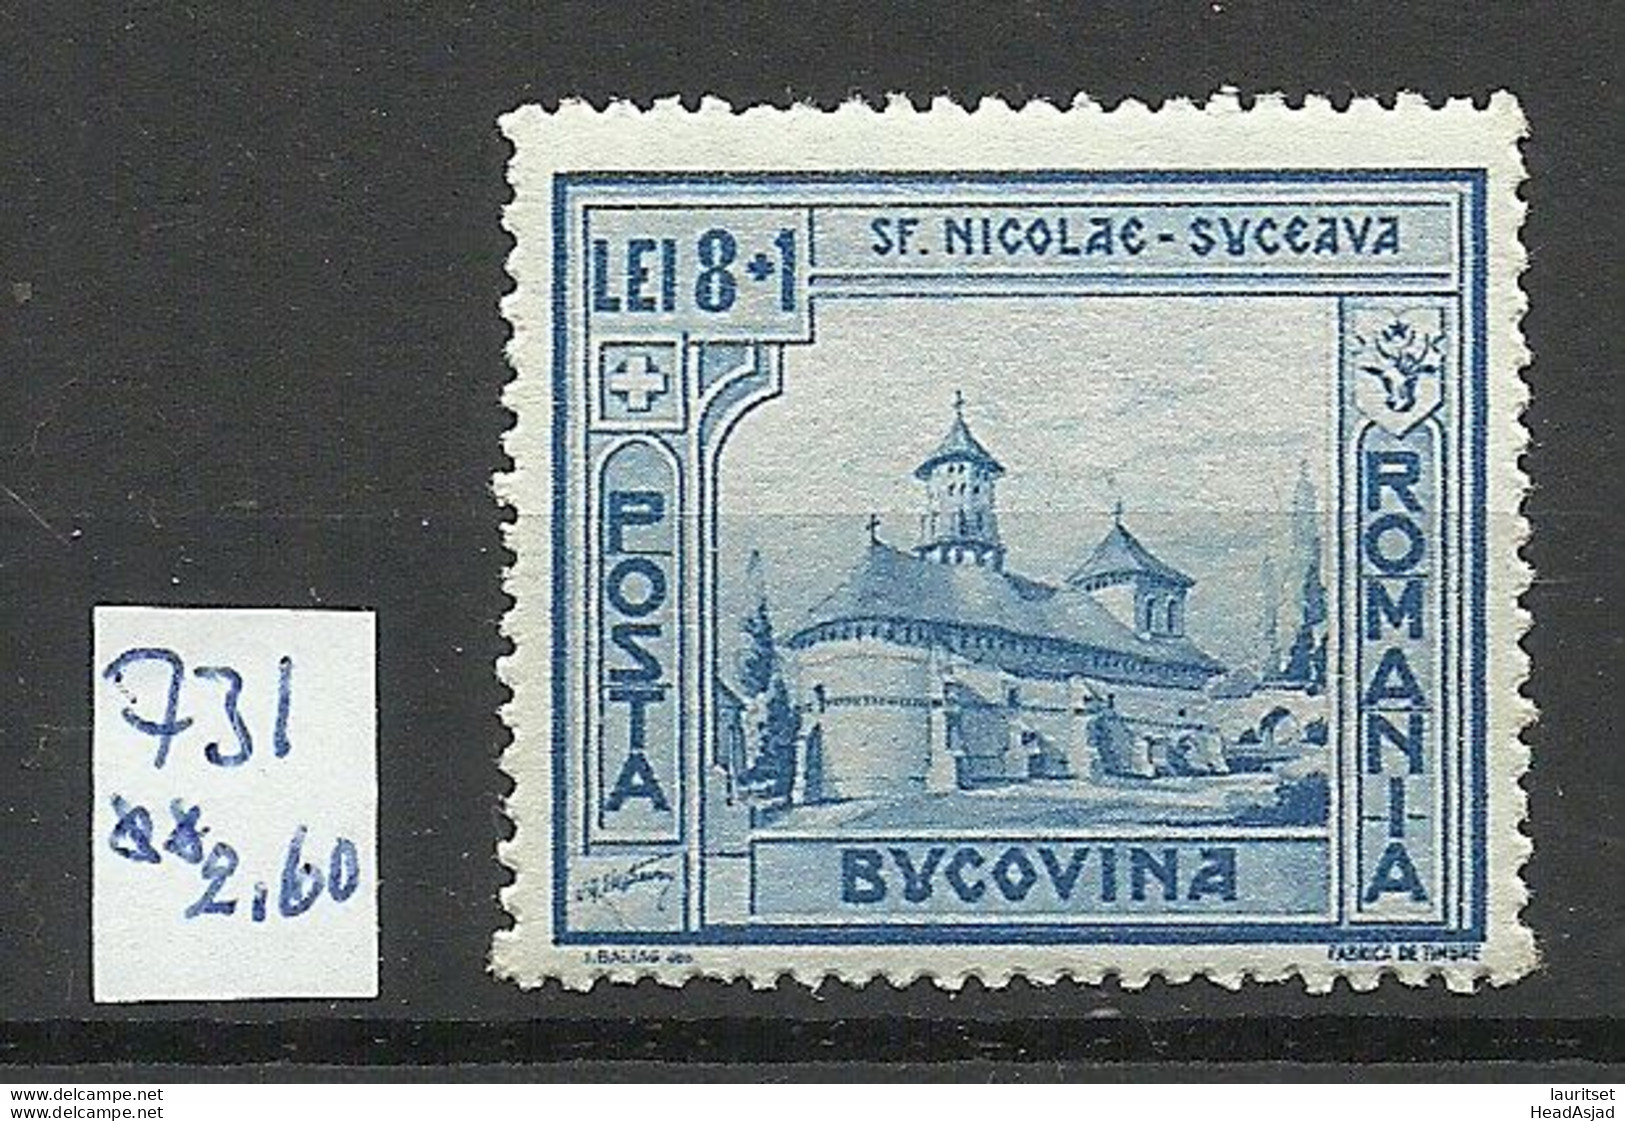 ROMANIA Rumänien 1941 Michel 738 Bucovina Arcitecture MNH - Nuovi